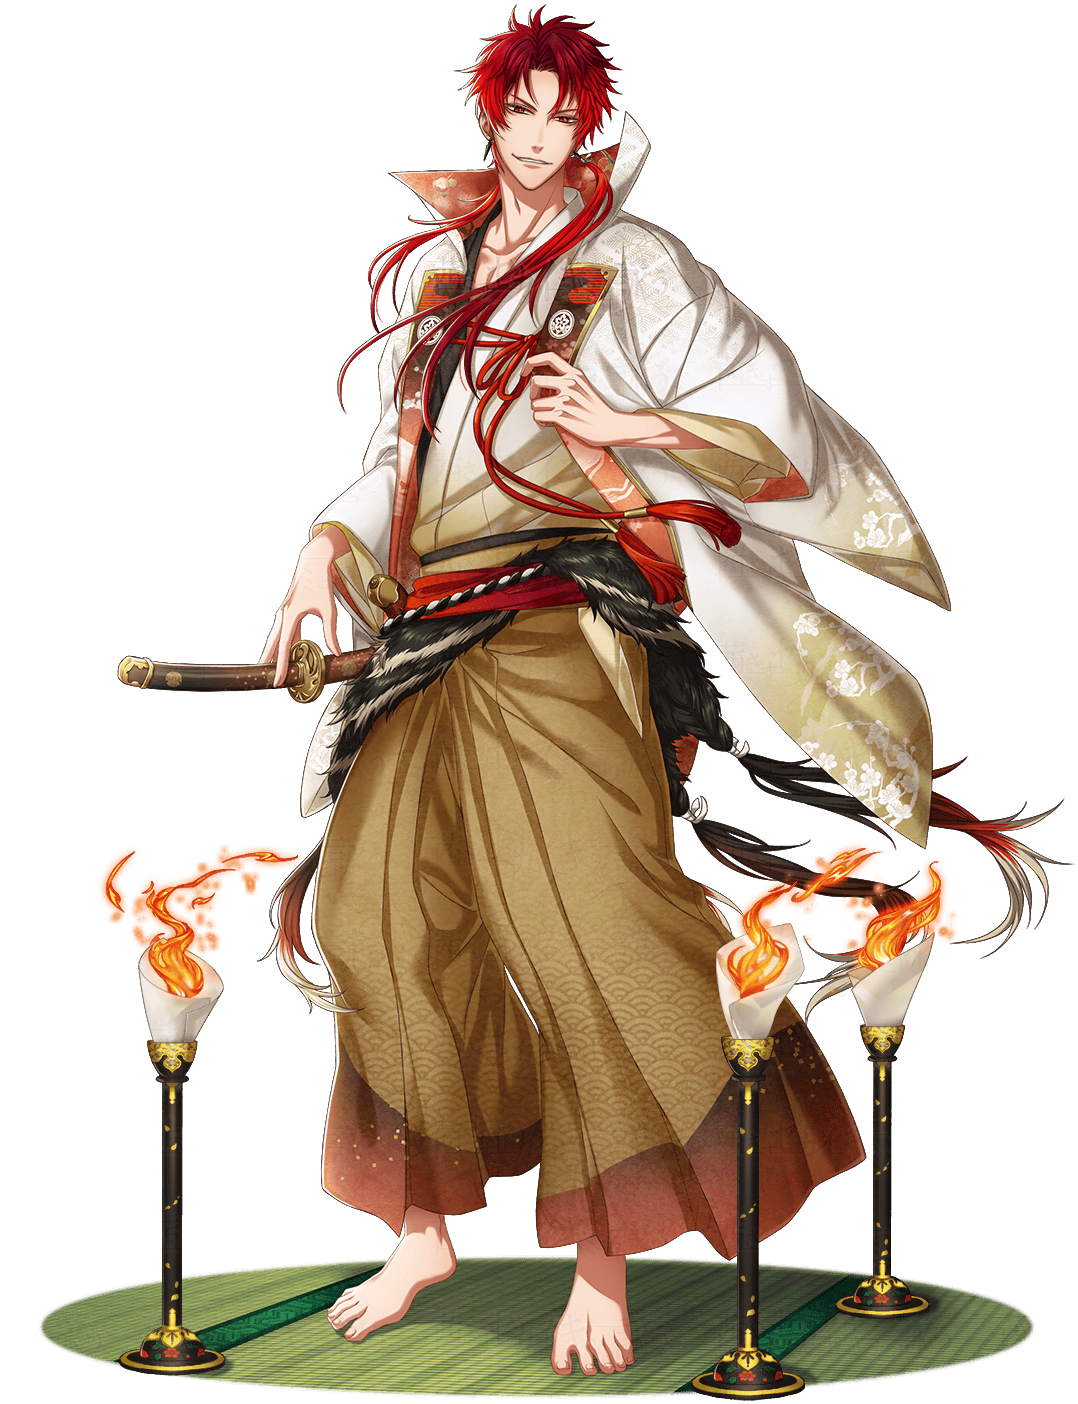 Oda Nobunaga (Life) | Reciting With You in the Glowing Red World Wikia ...